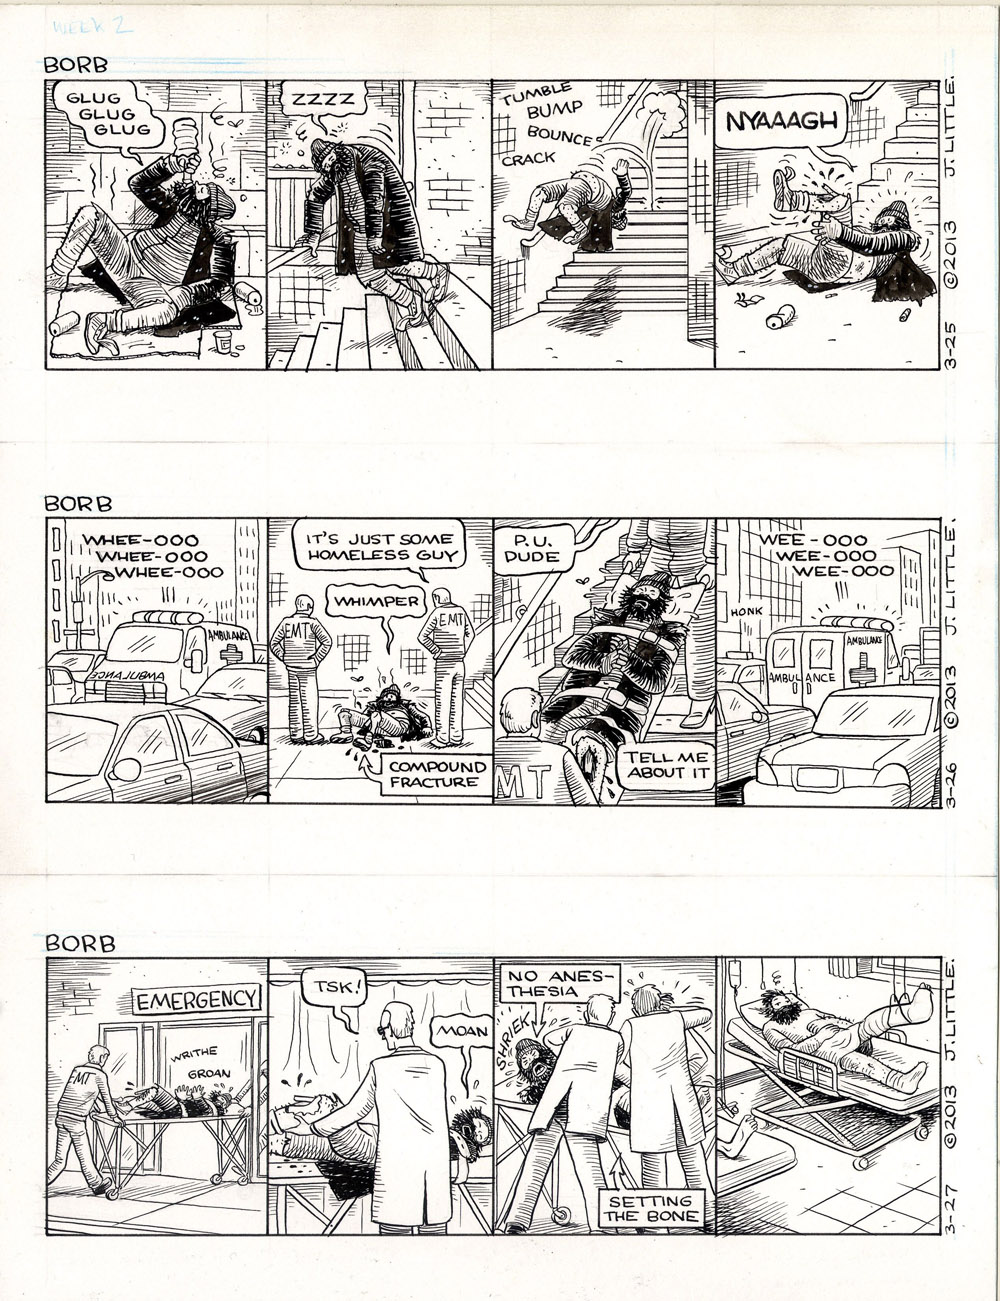 Borb - page 15-17